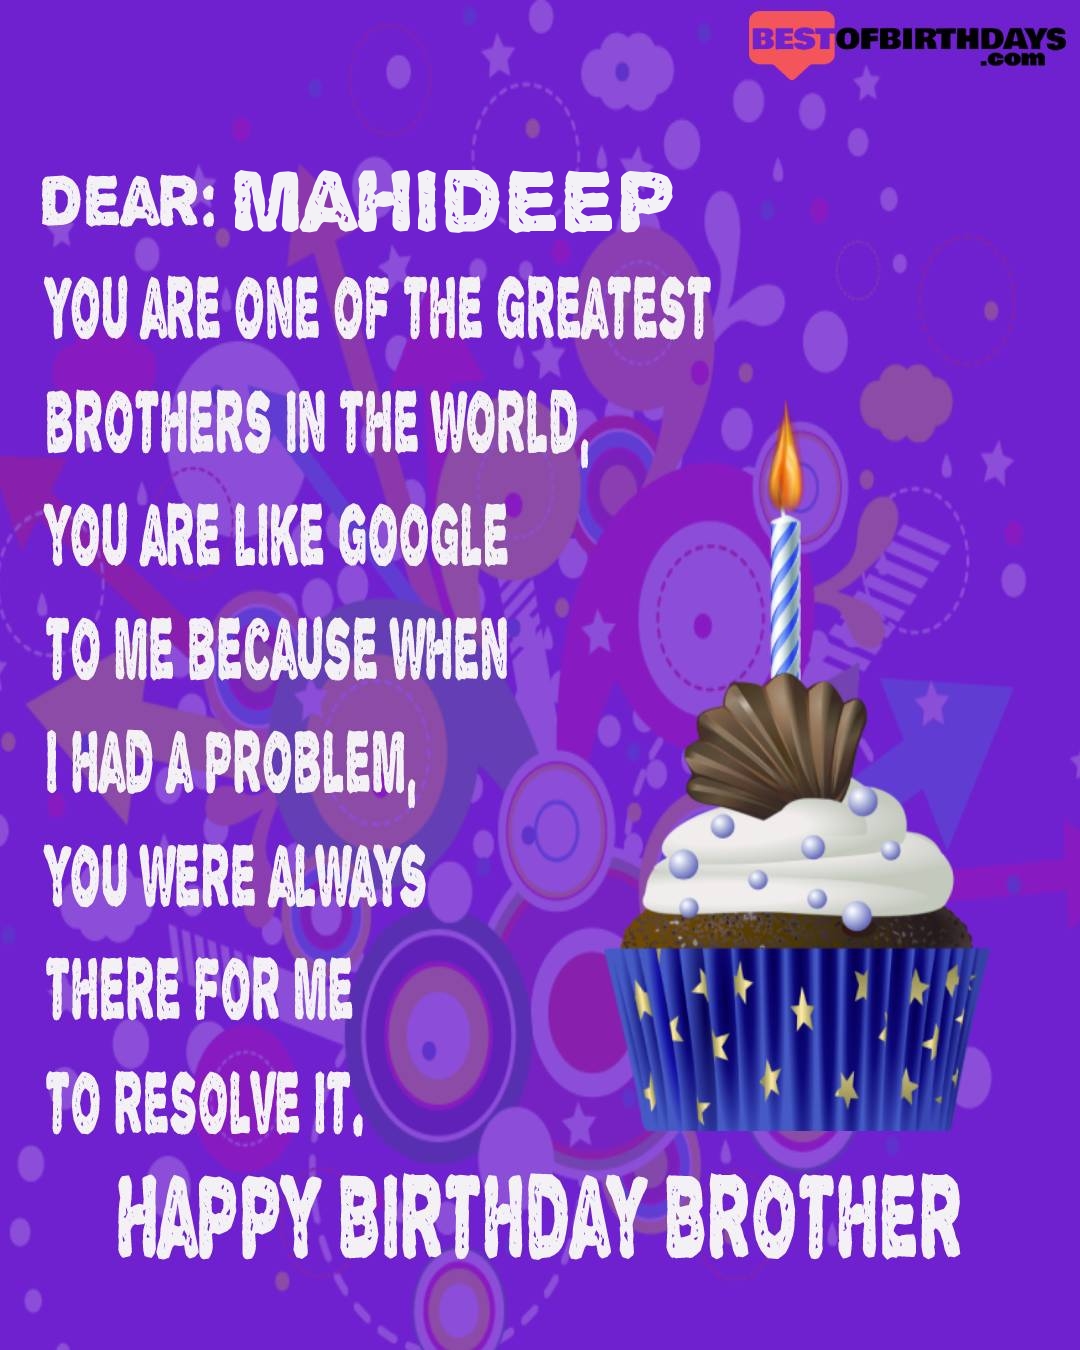 Happy birthday mahideep bhai brother bro